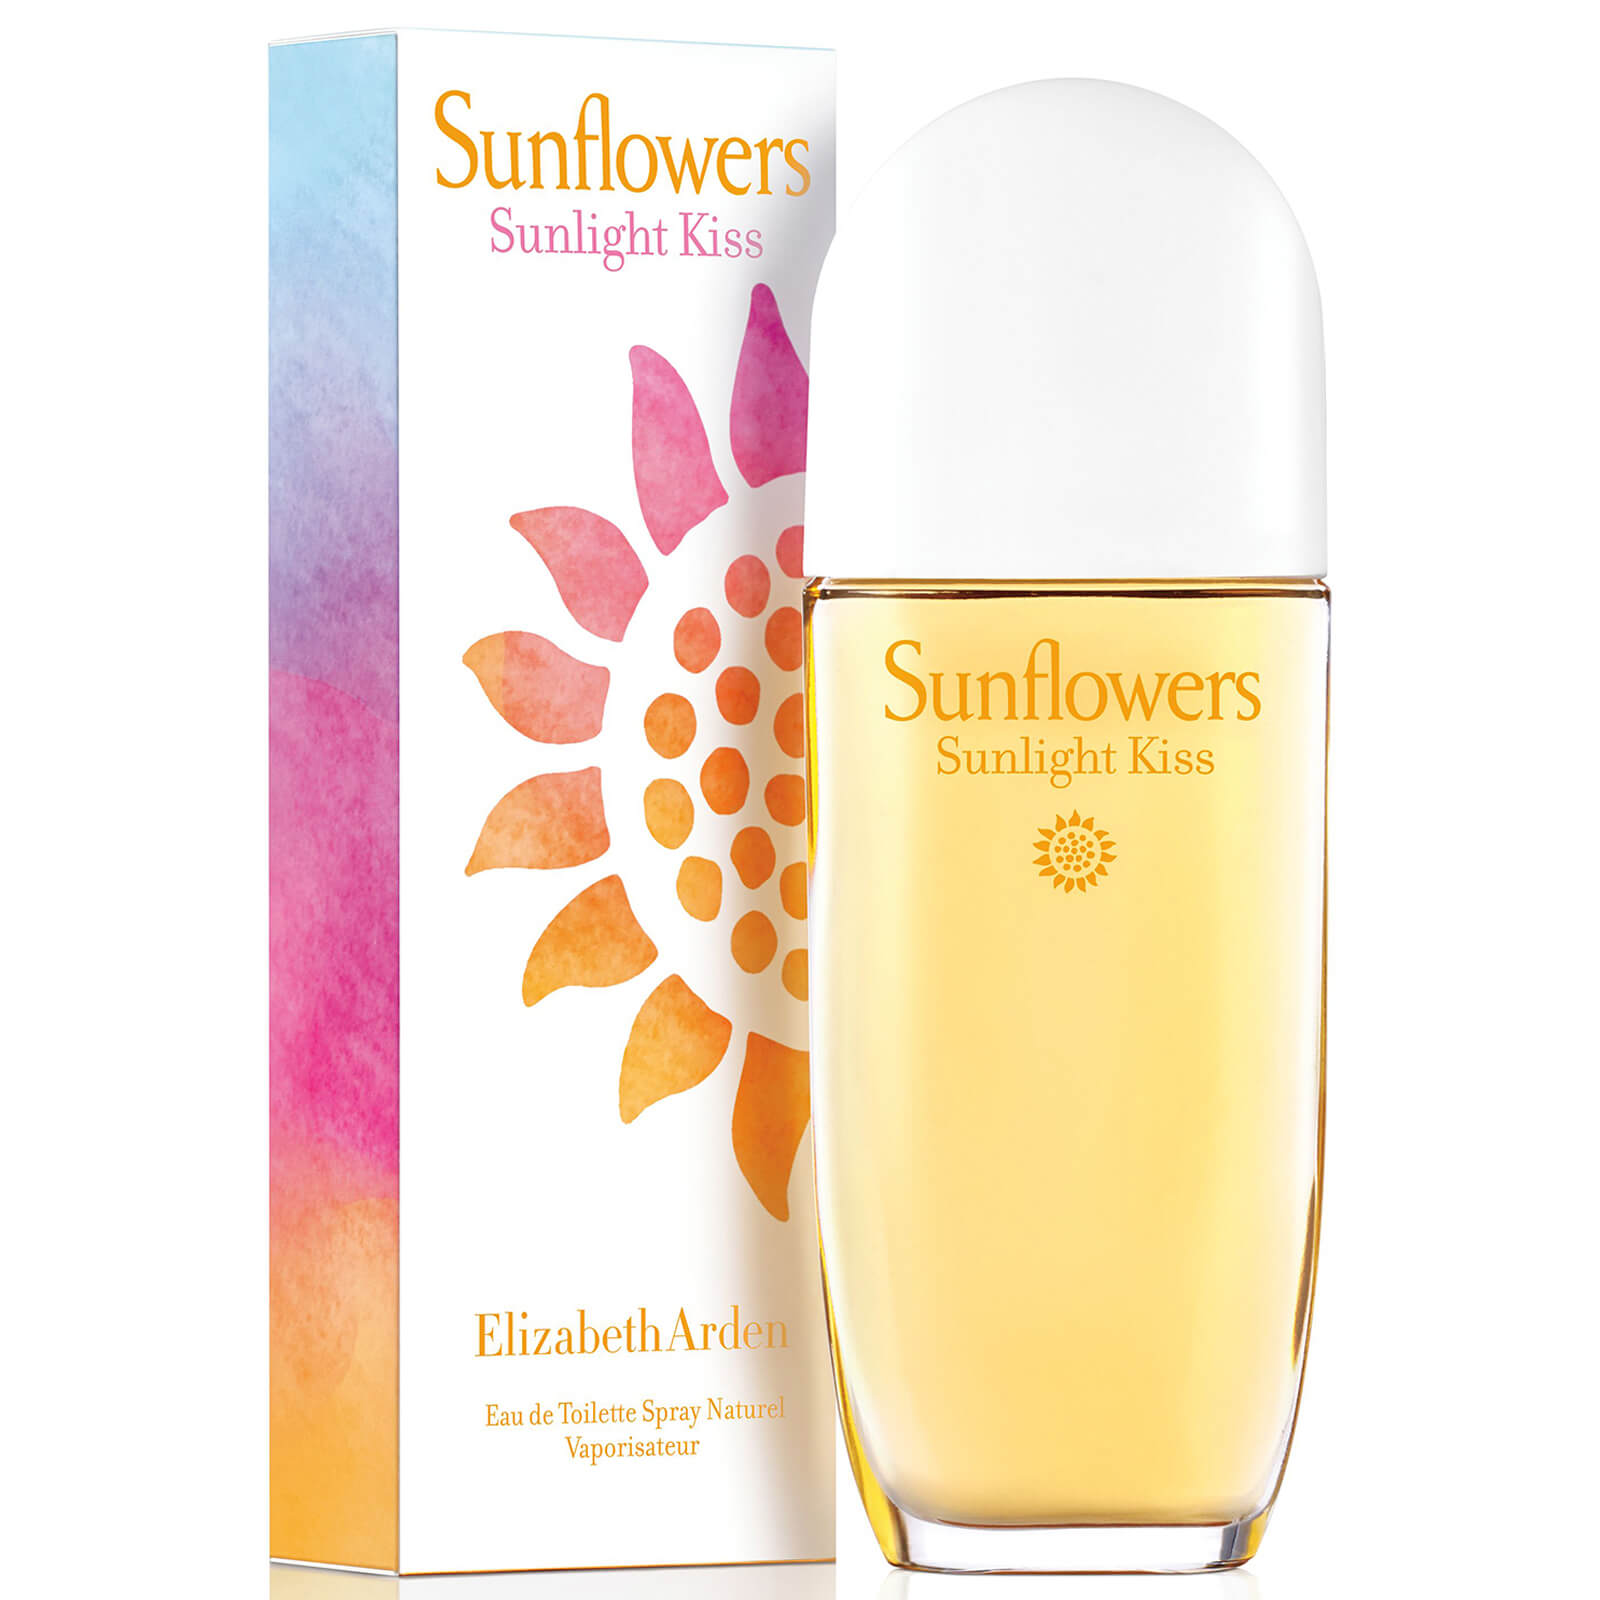 Eau de toilette Sunflowers Sunlight Kiss de Elizabeth Arden 100 ml